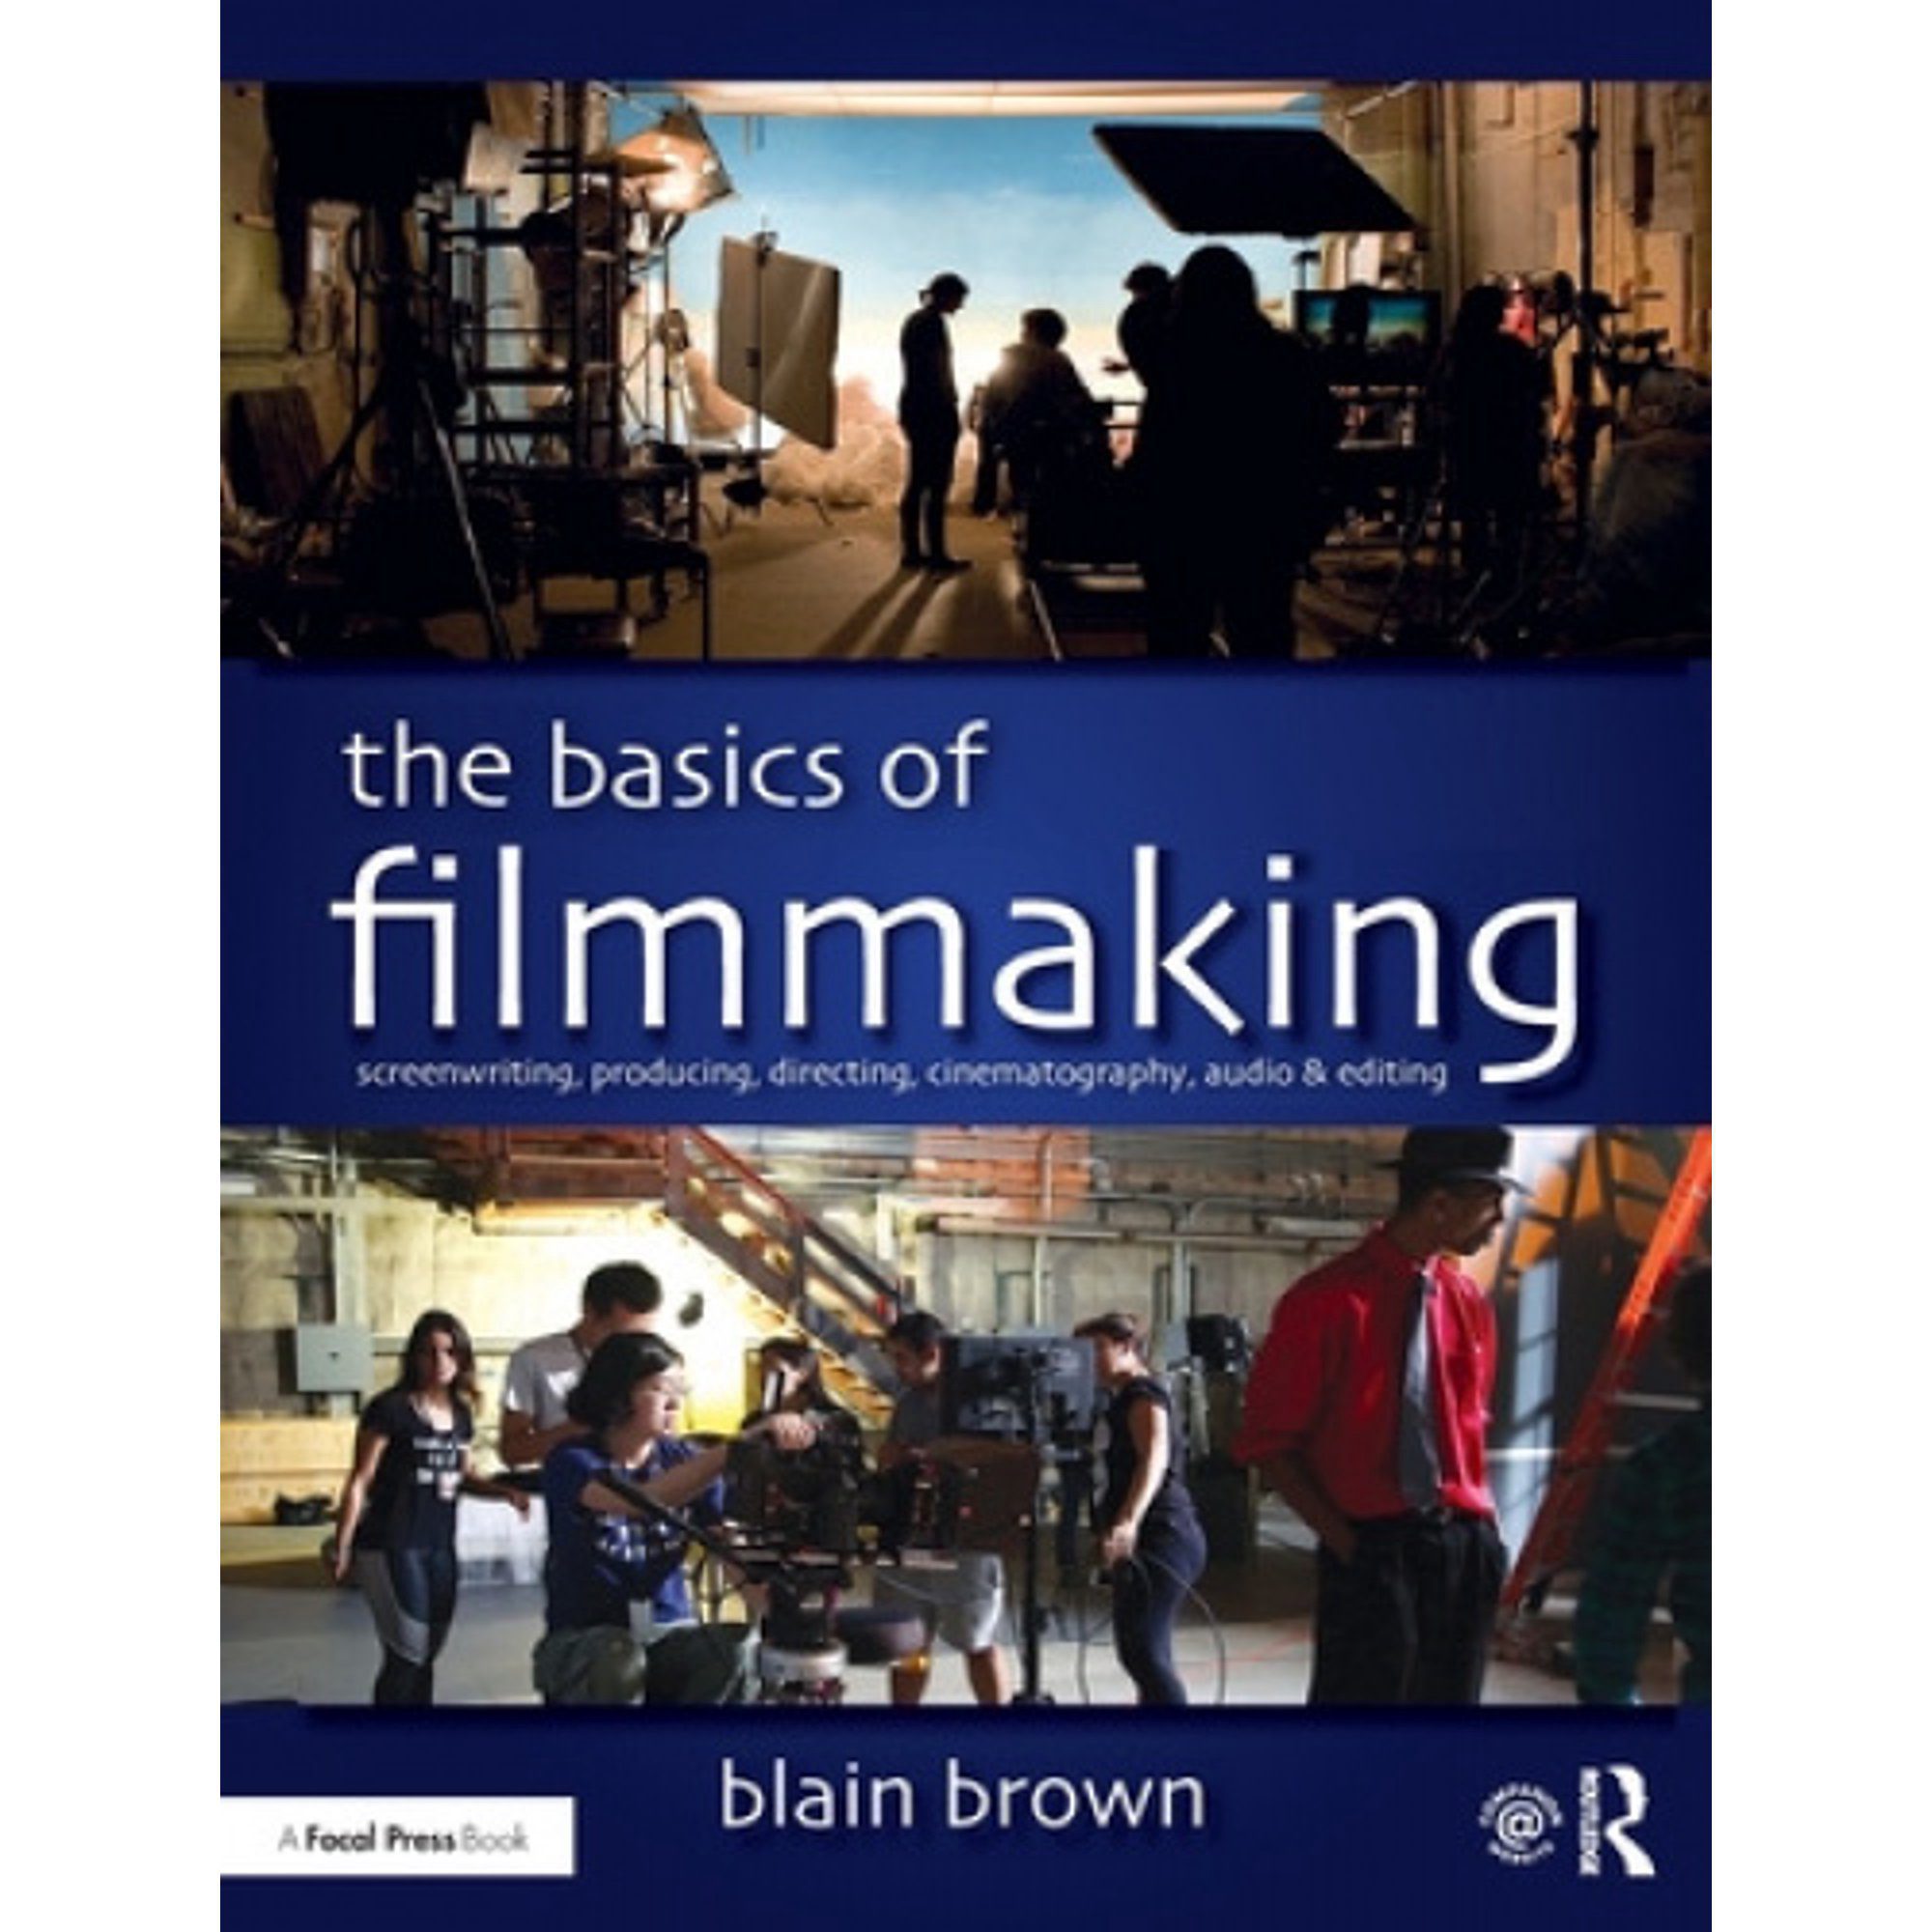 THE BASICS OF FILMMAKING SCREENWRITING PRODUCING